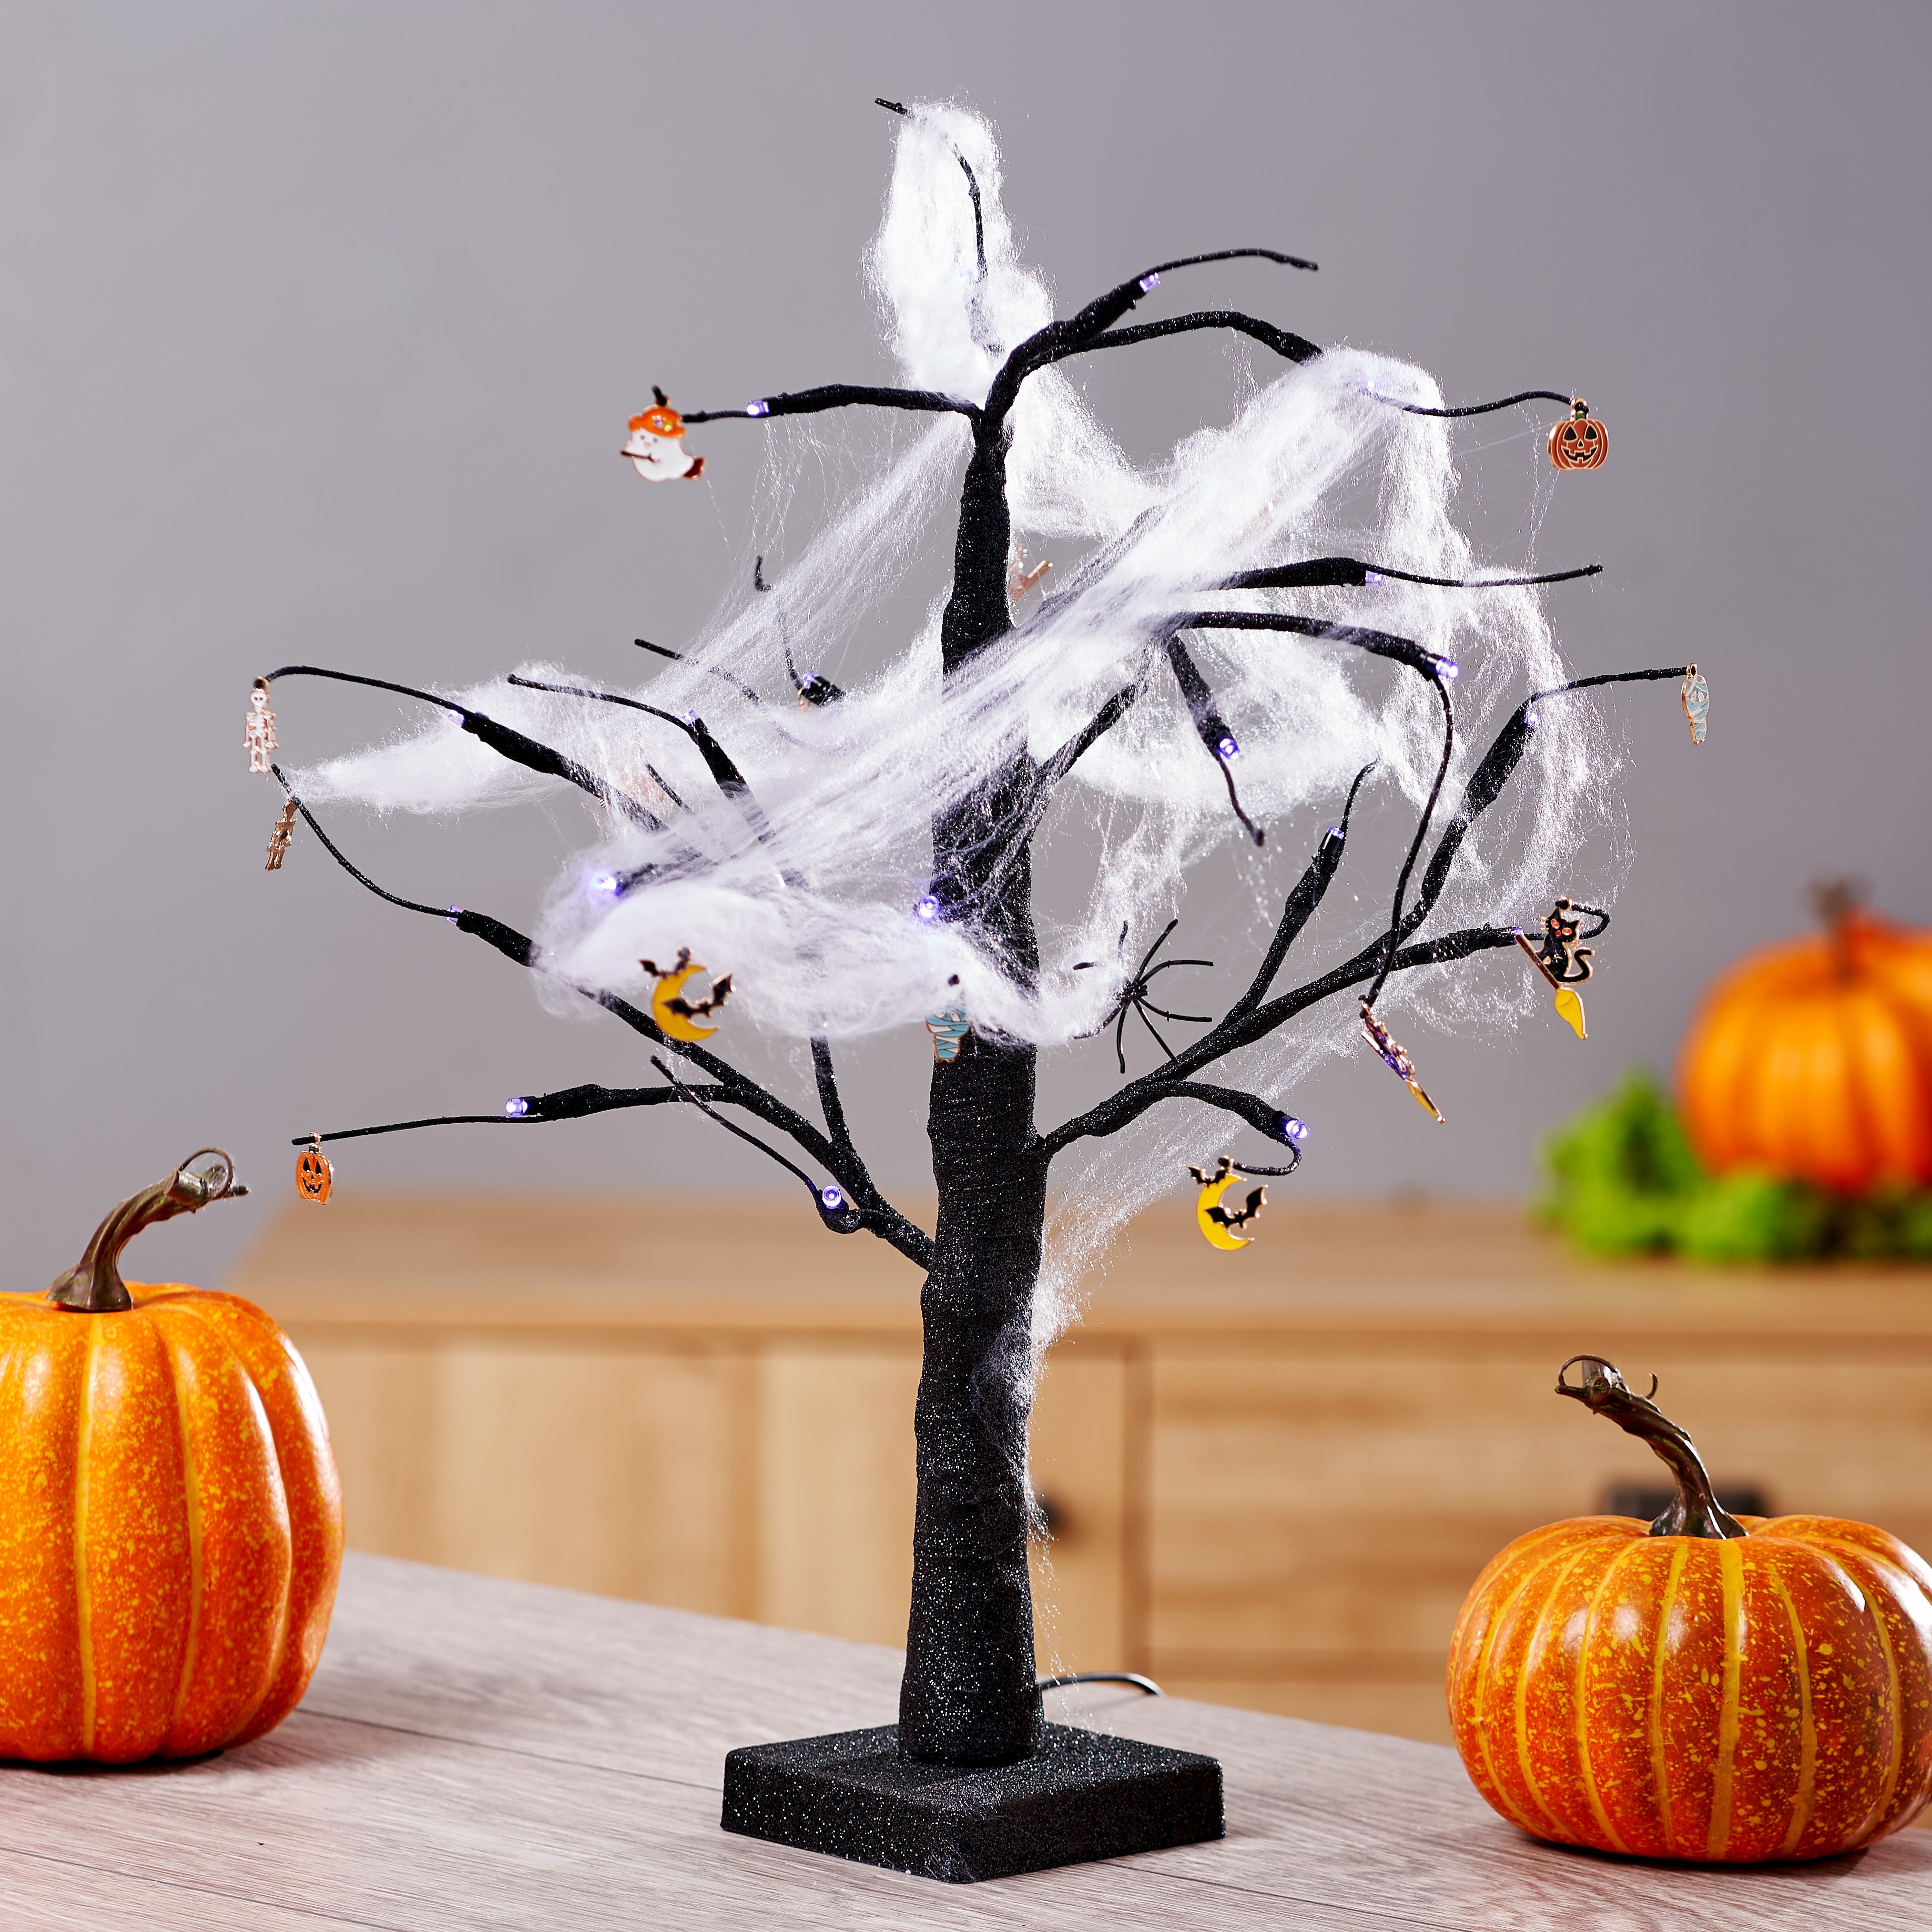 Spooky LED Halloween Tree Decoration with Cobwebs